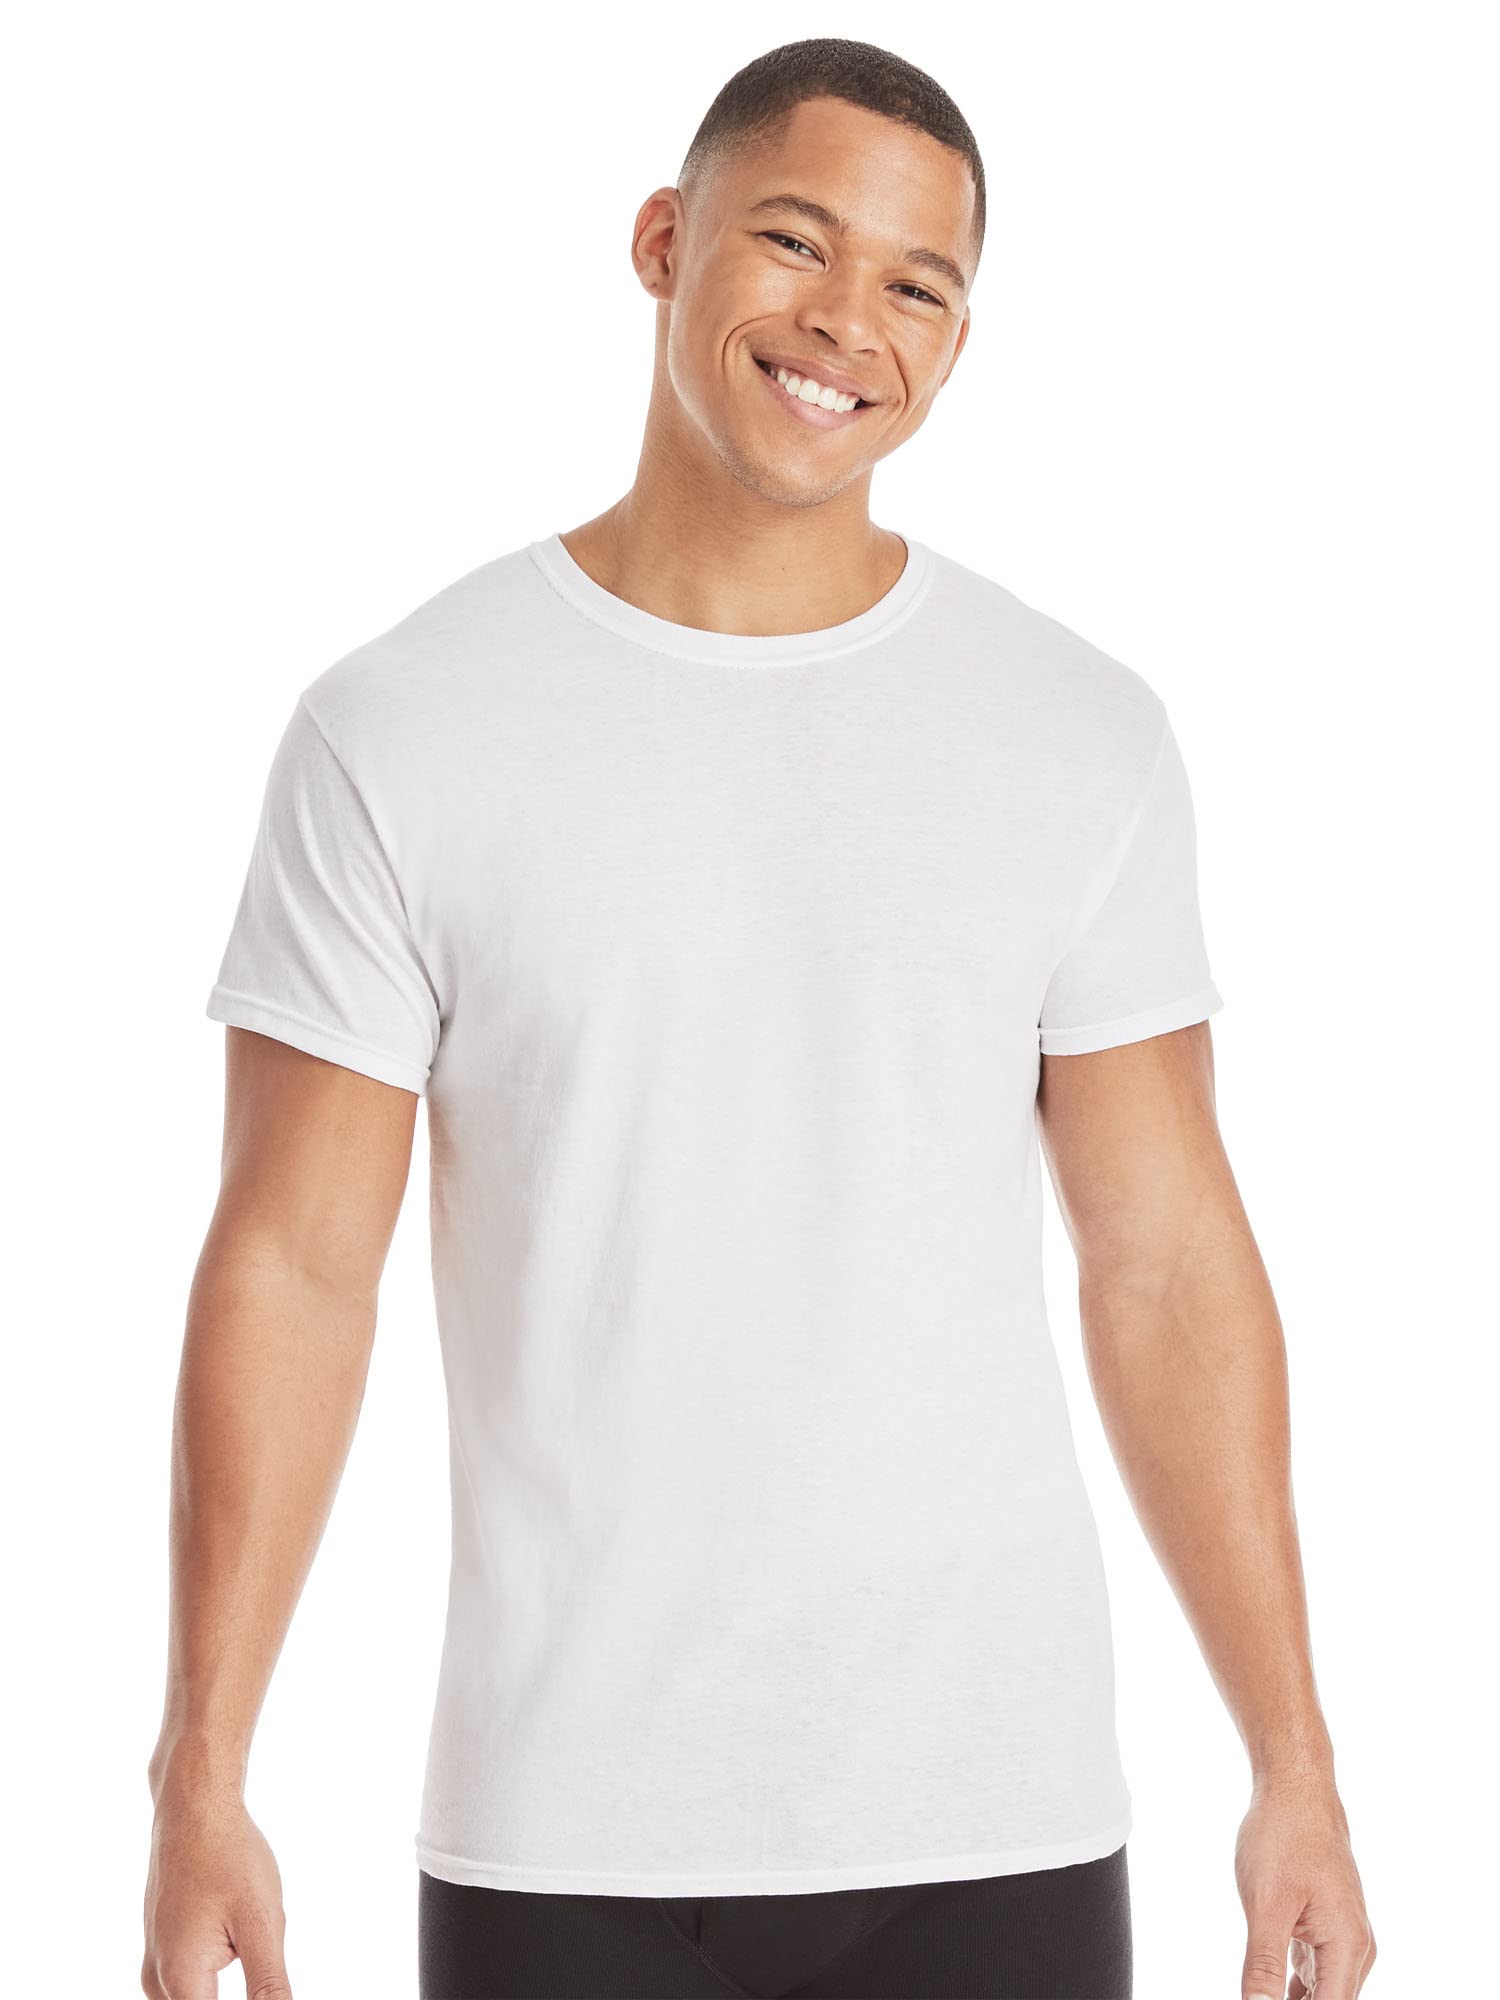 Hanes Men's, Odor Control, Moisture-Wicking Tee Shirts, 100% Cotton Undershirts, Multi-Packs